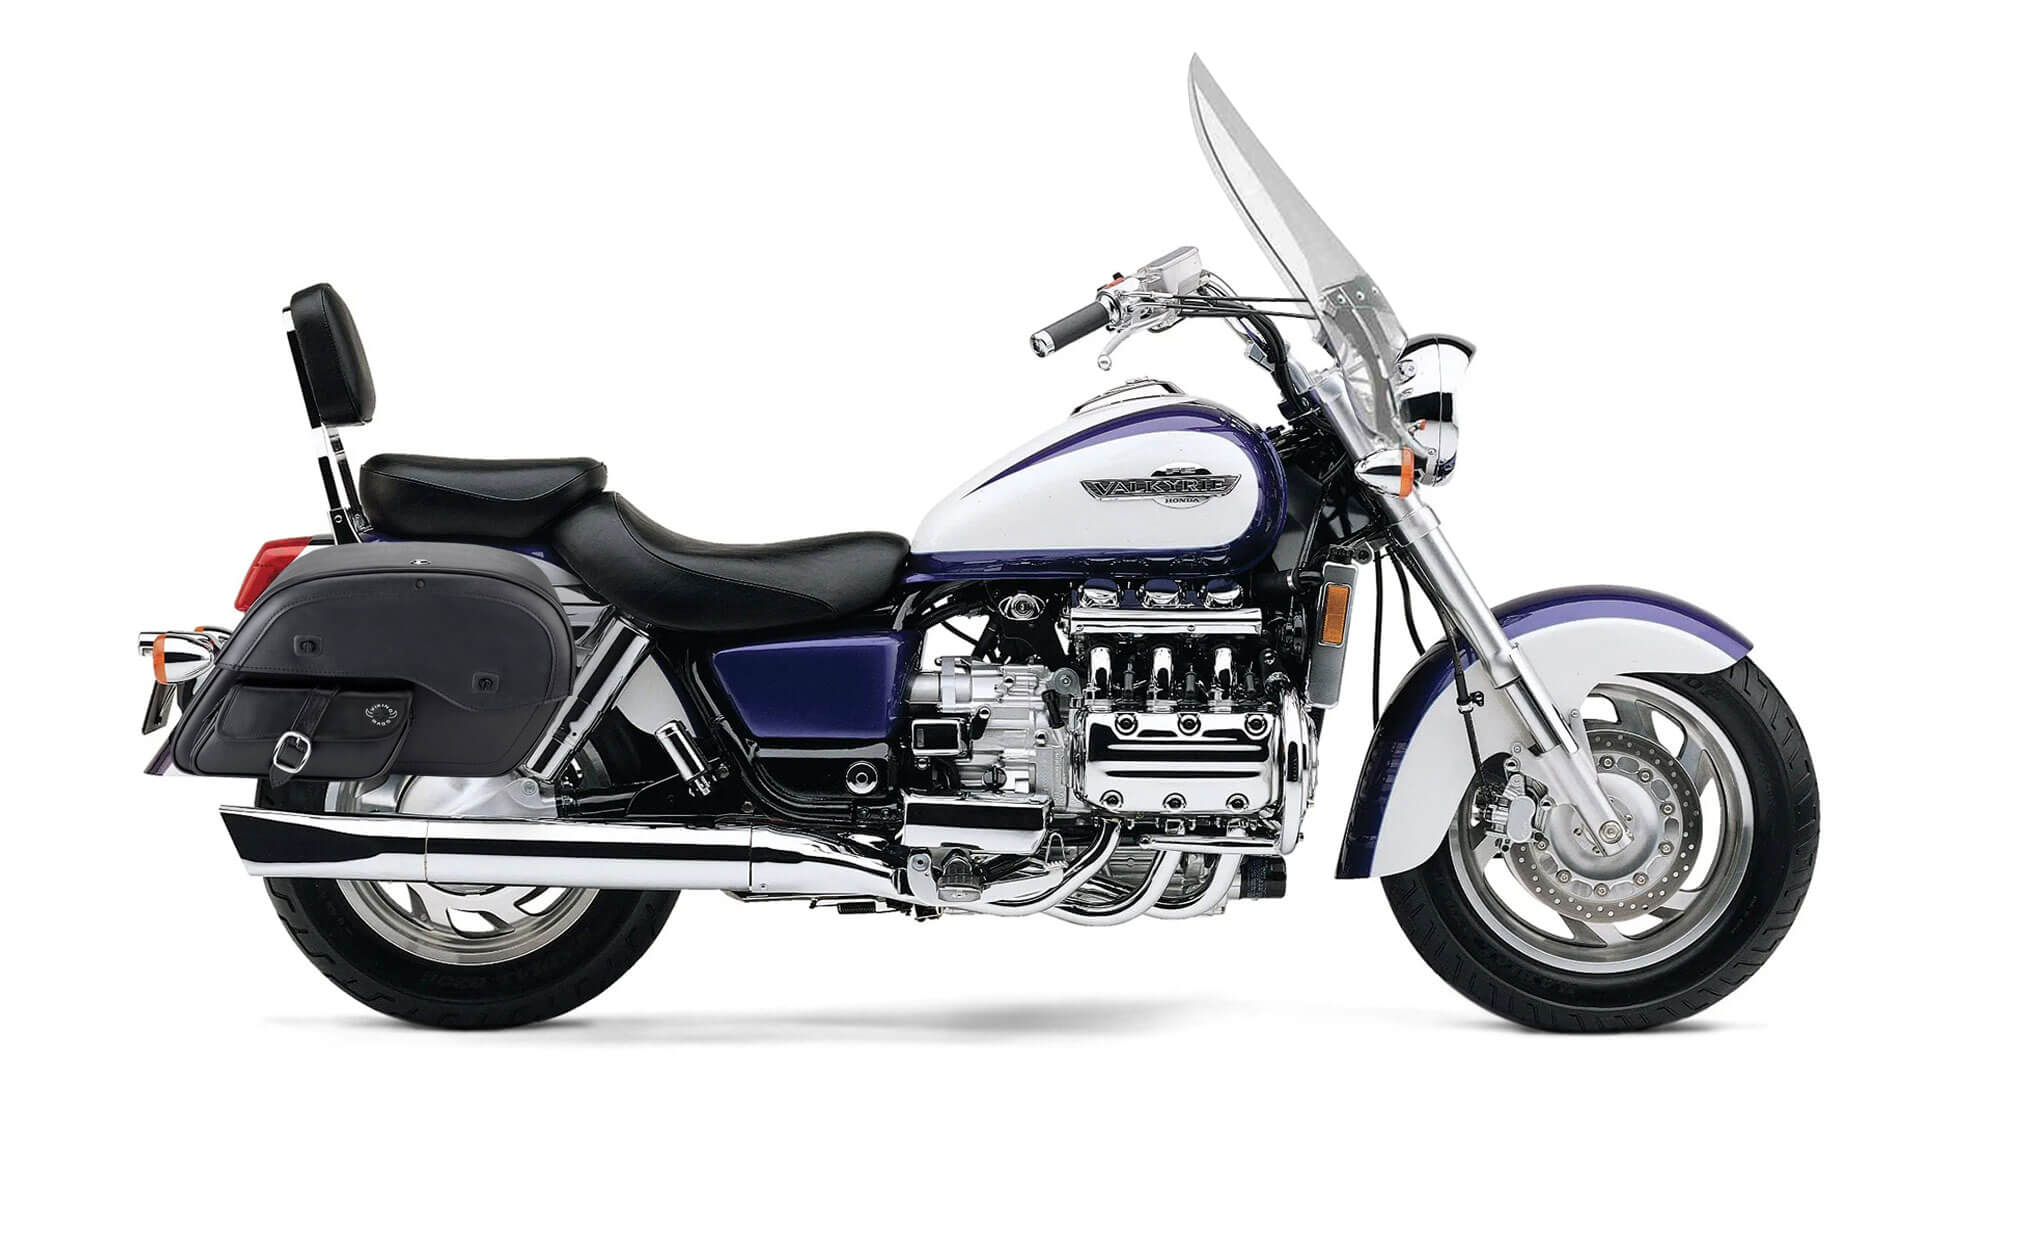 Viking Essential Side Pocket Large Honda Valkyrie 1500 Tourer Leather Motorcycle Saddlebags on Bike Photo @expand